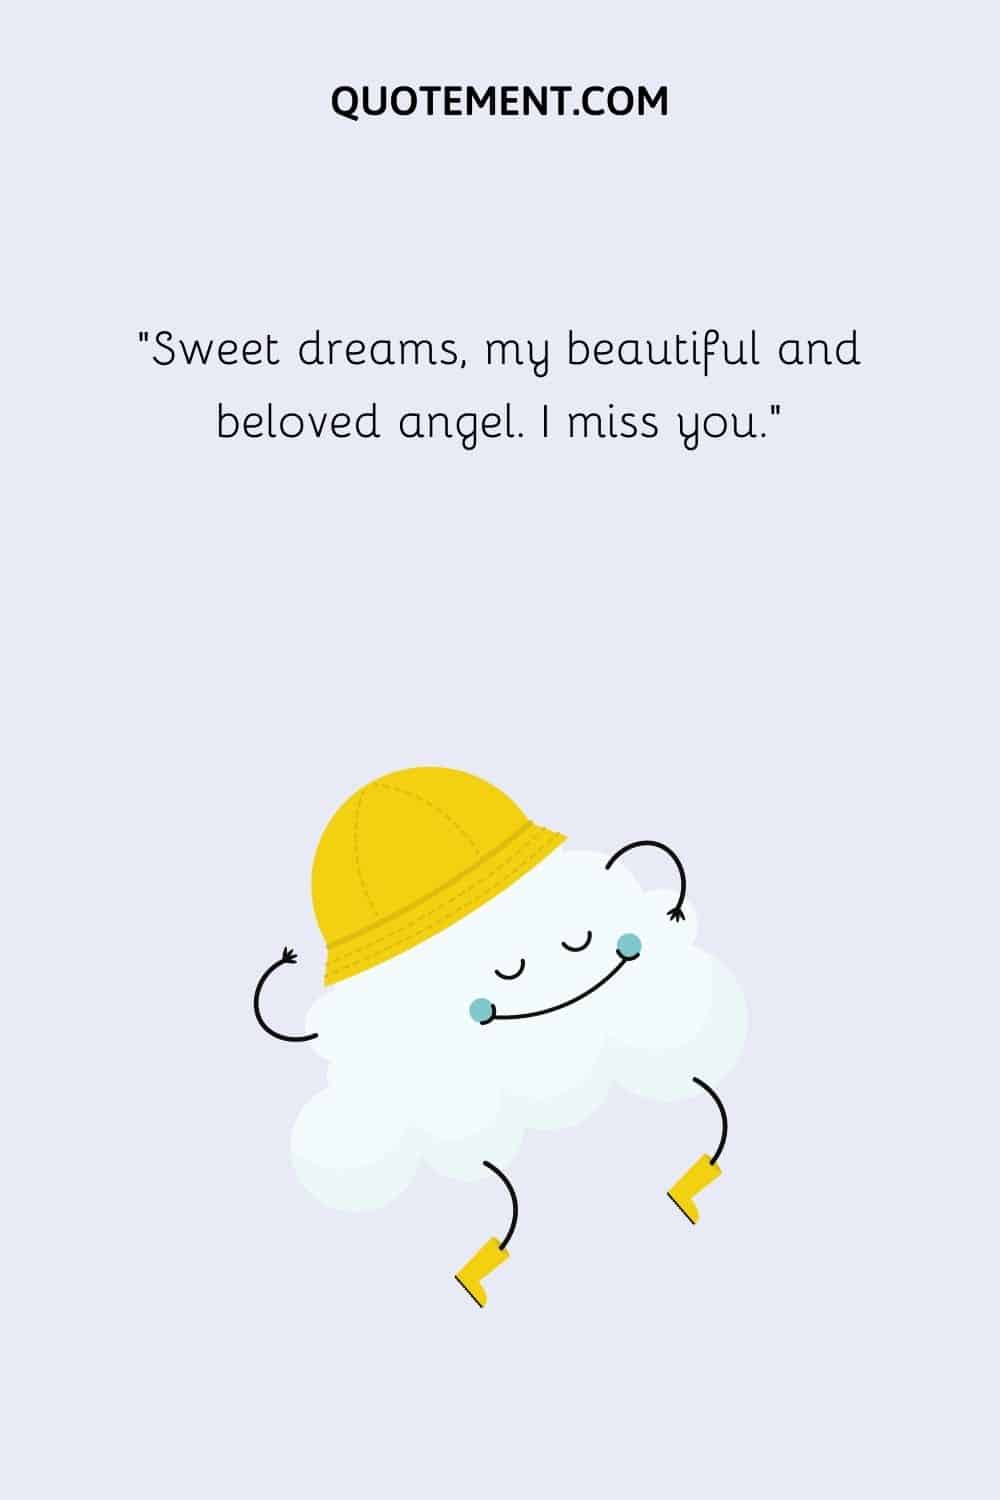 Sweet dreams, my beautiful and beloved angel